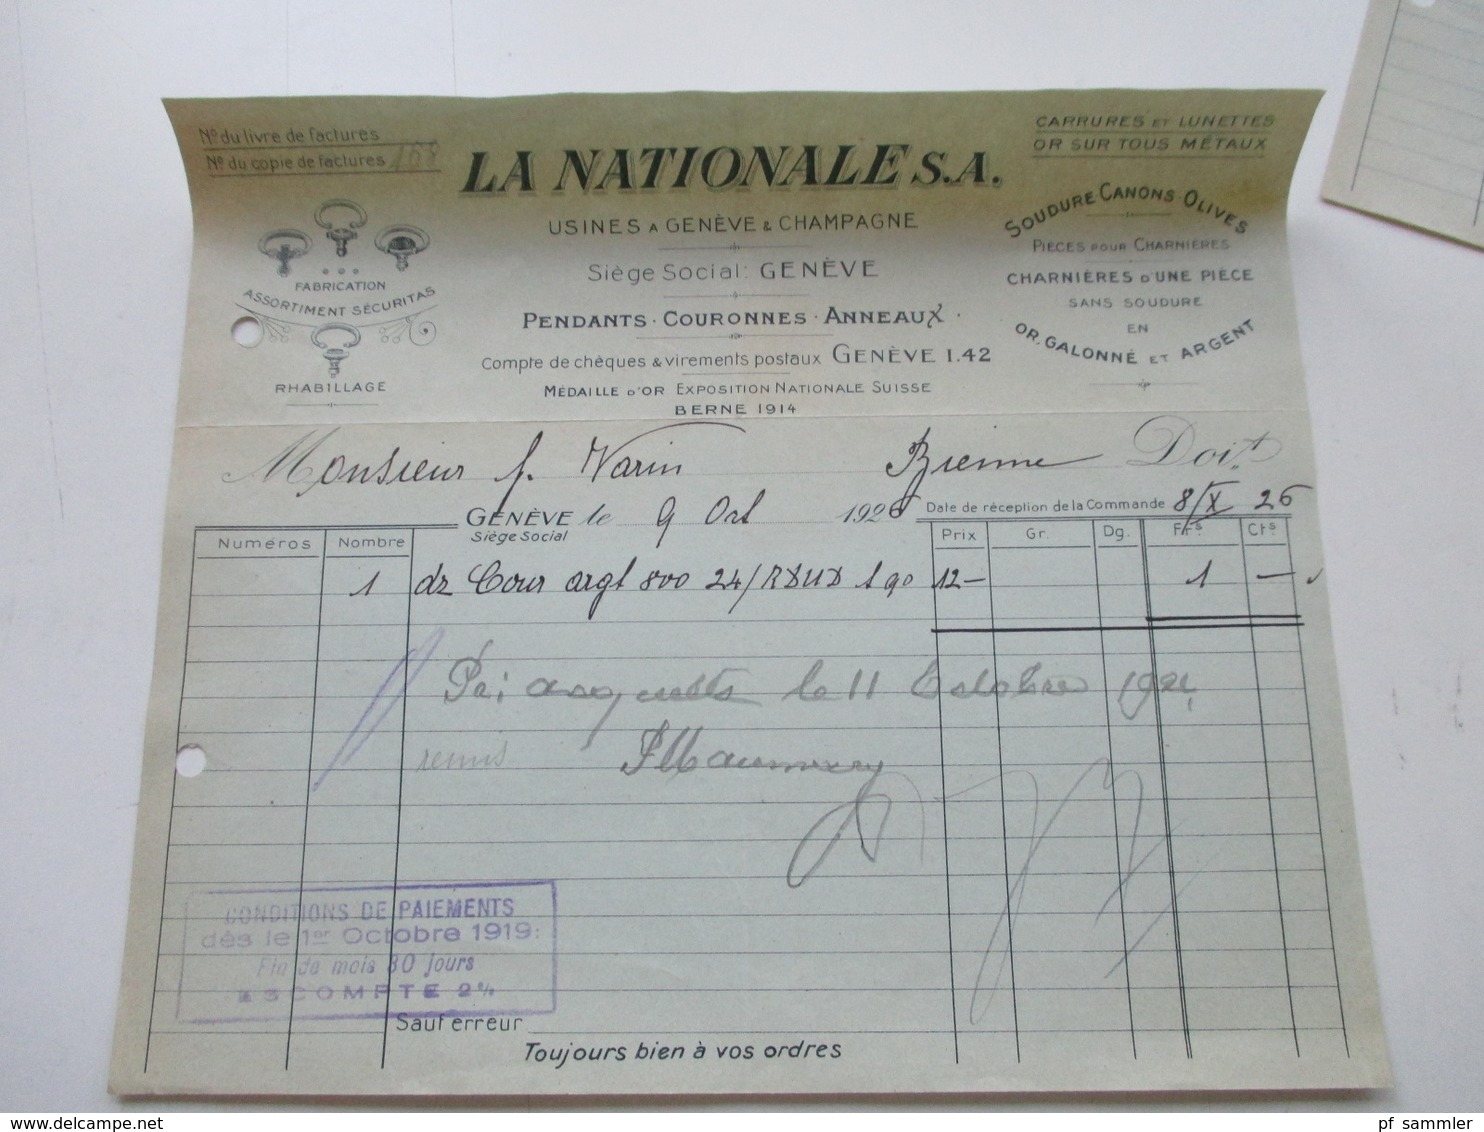 Schweiz 1924 / 26 4 Rechnungen La Nationale S.A. Usines A Geneve & Champagne Fabrication Assortiment Securitas - Switzerland